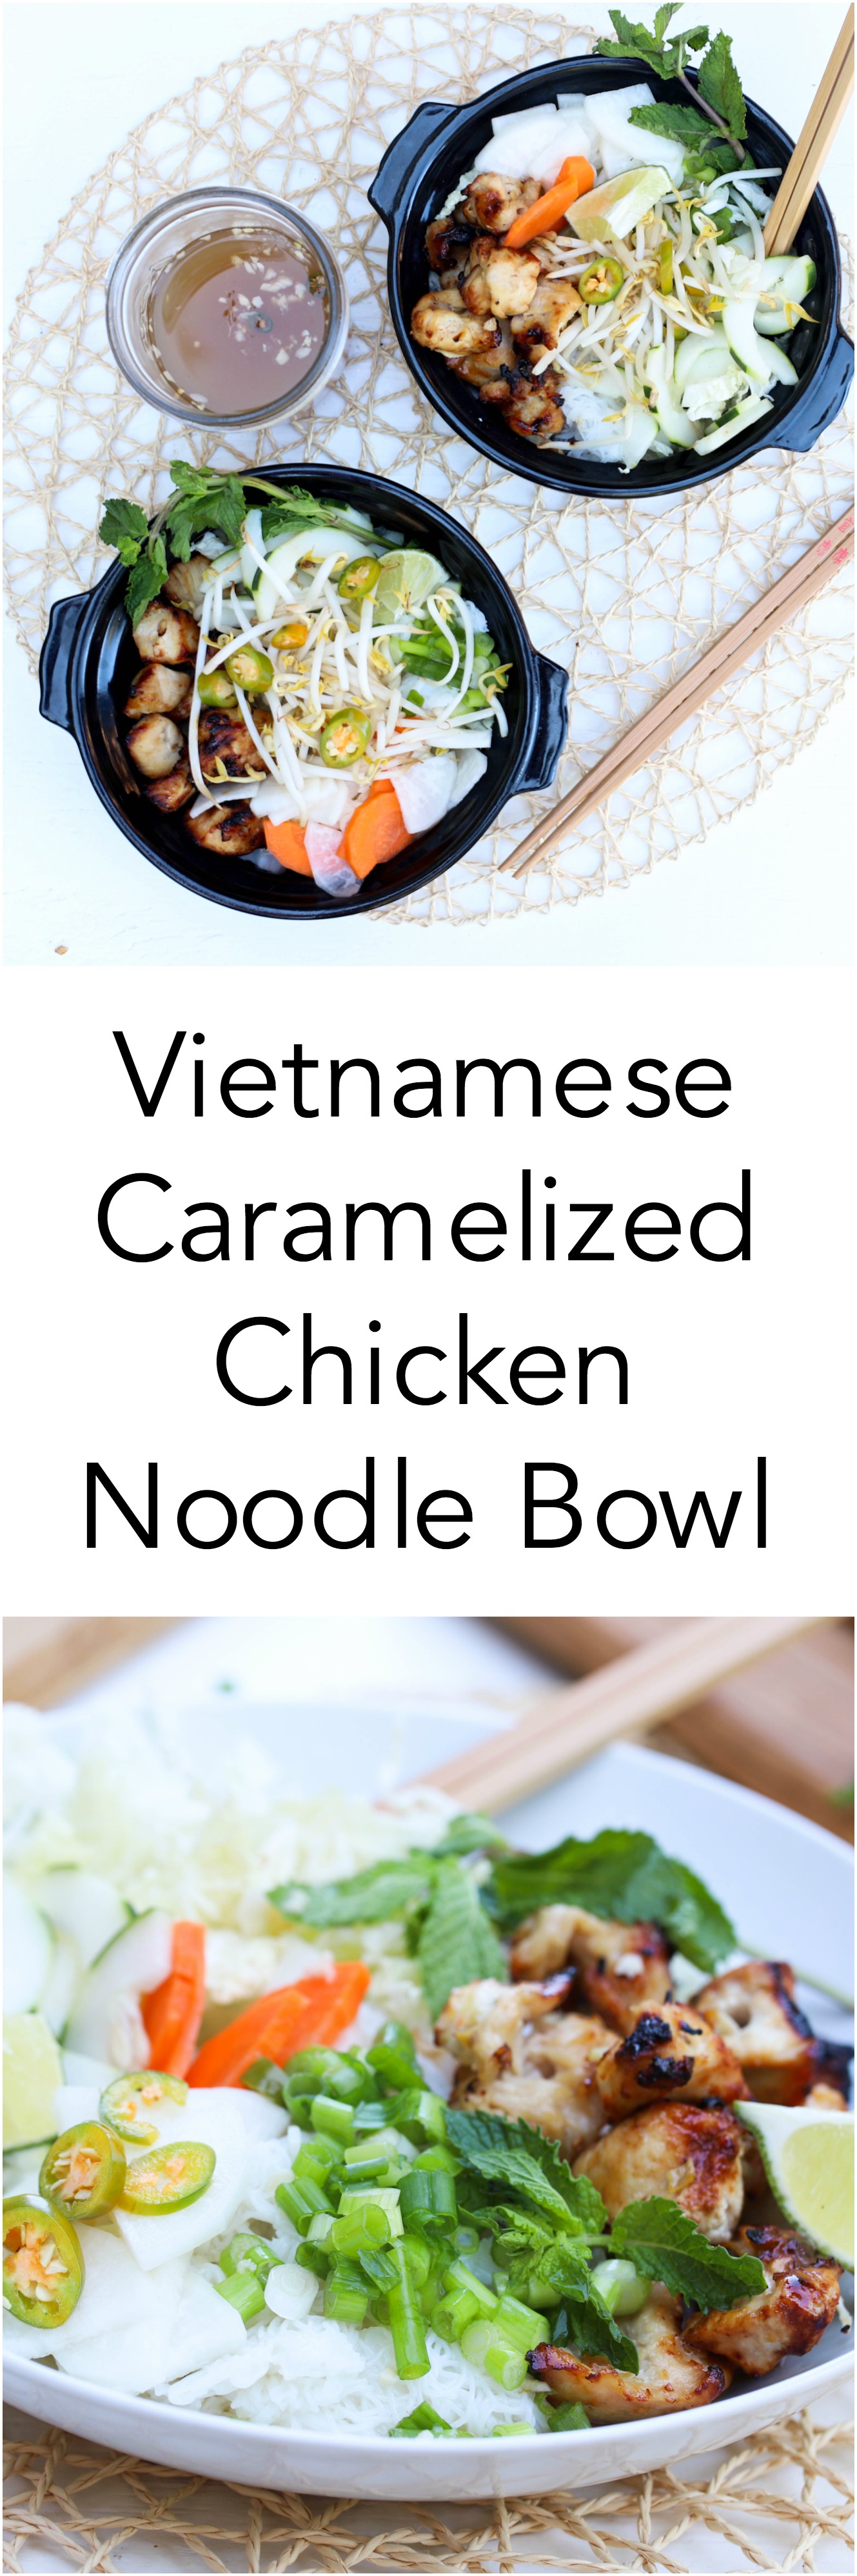 Vietnamese Caramelized Chicken Noodle Bowl.jpg